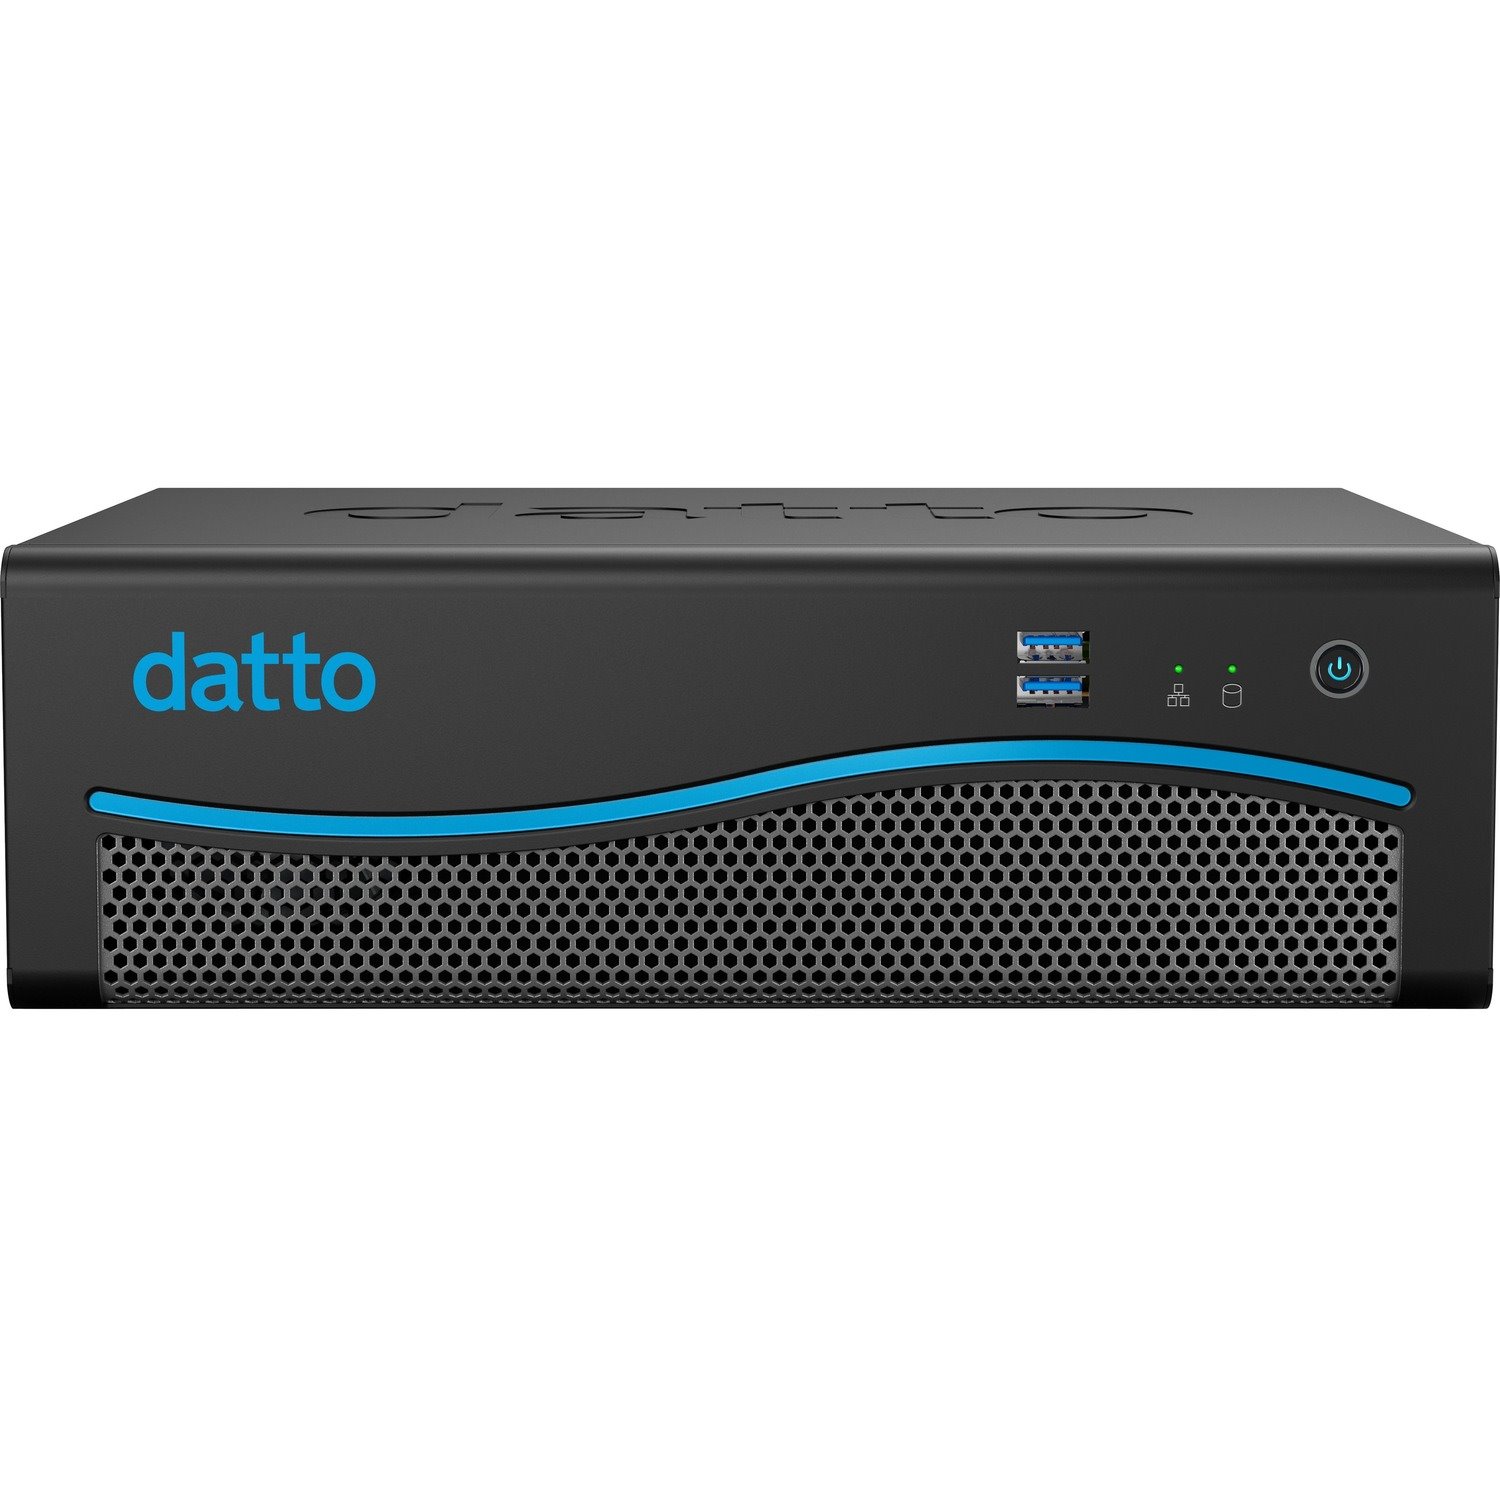 Datto Siris S4-E12  Appliance